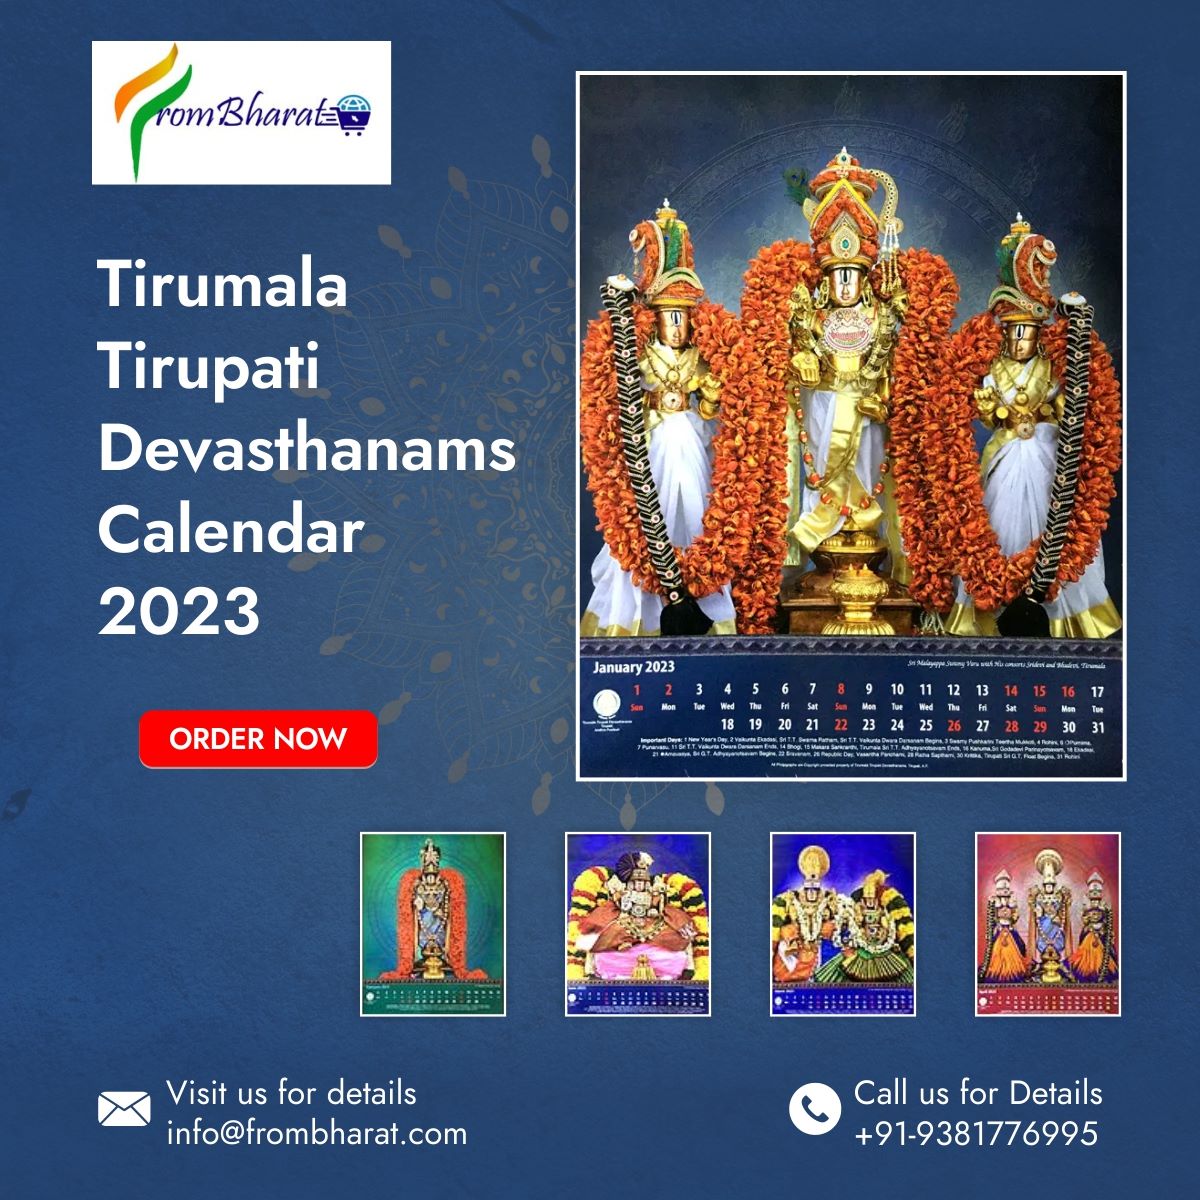 Tirumala Tirupati Devasthanams Calendar 2023